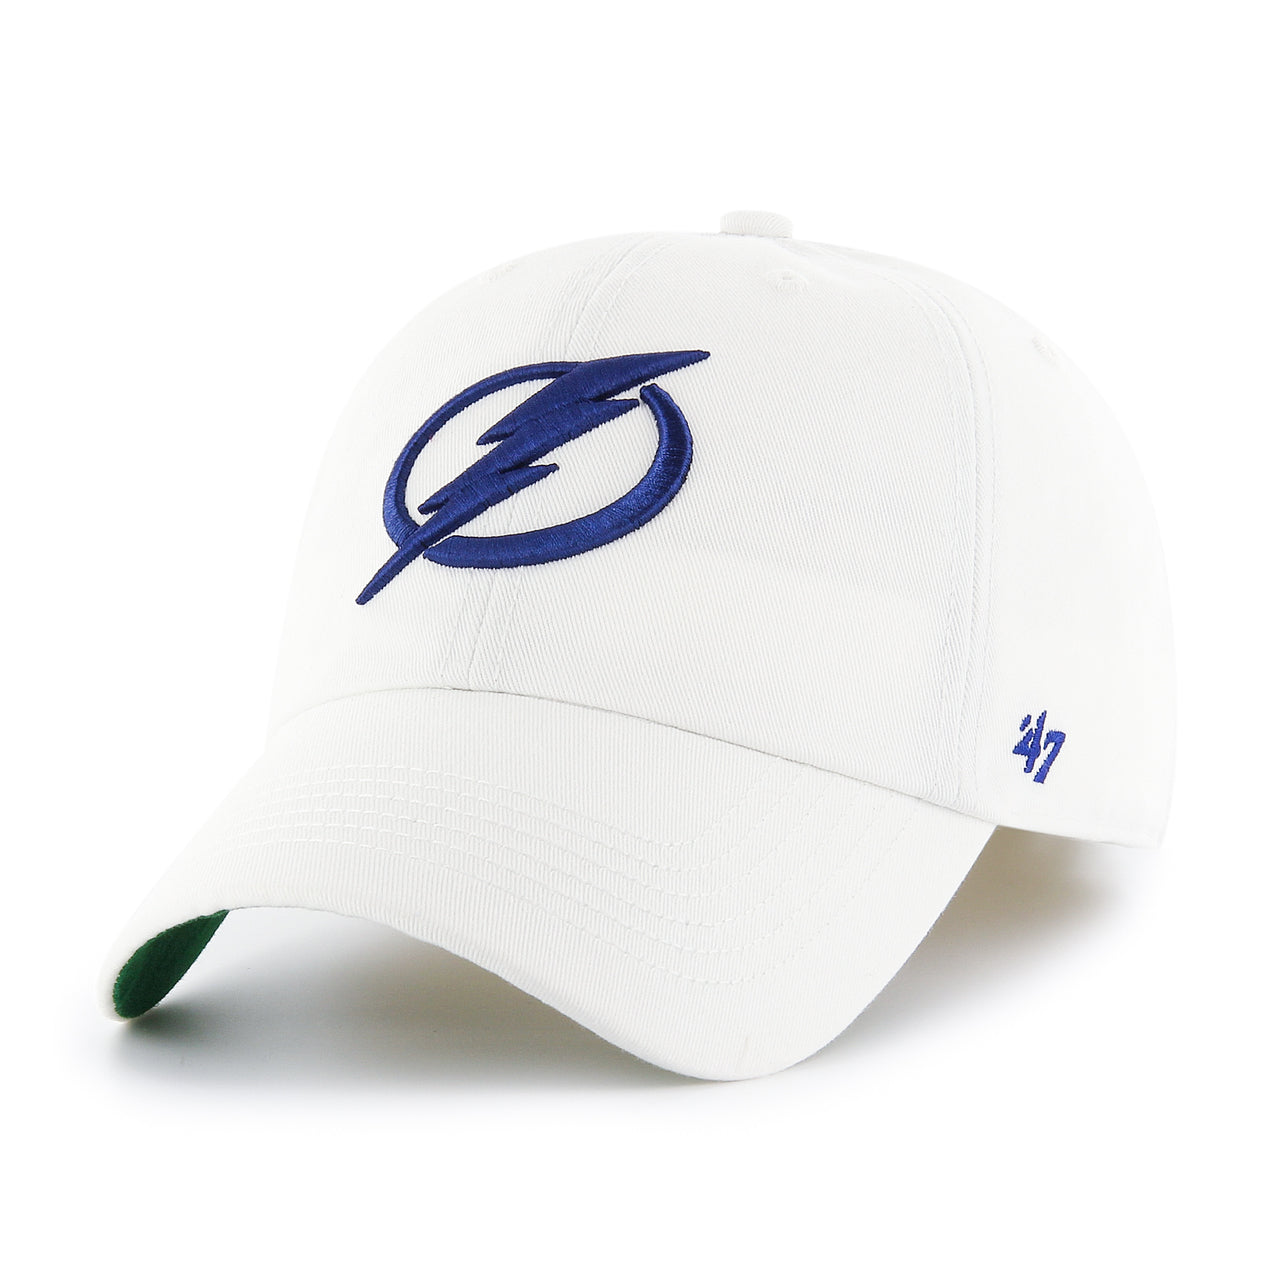 Tampa Bay Lightning '47 White Flex Fit Franchise Hat